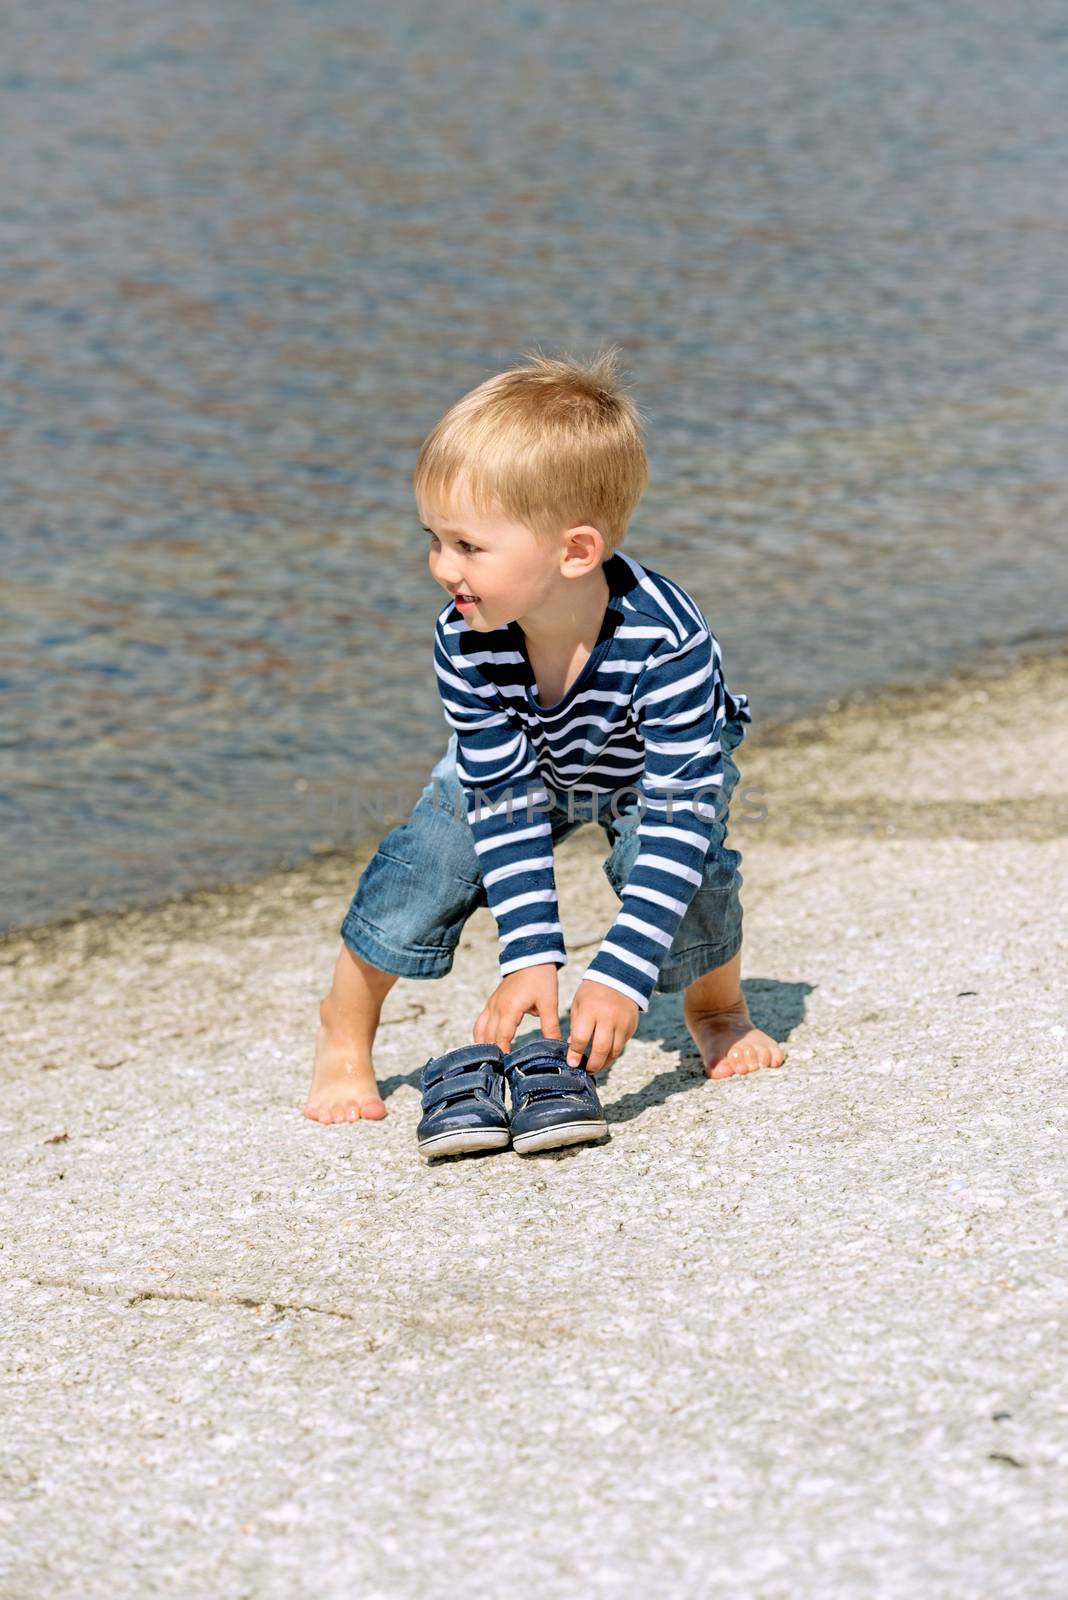 Little preschool boy playing on beach by Nanisimova